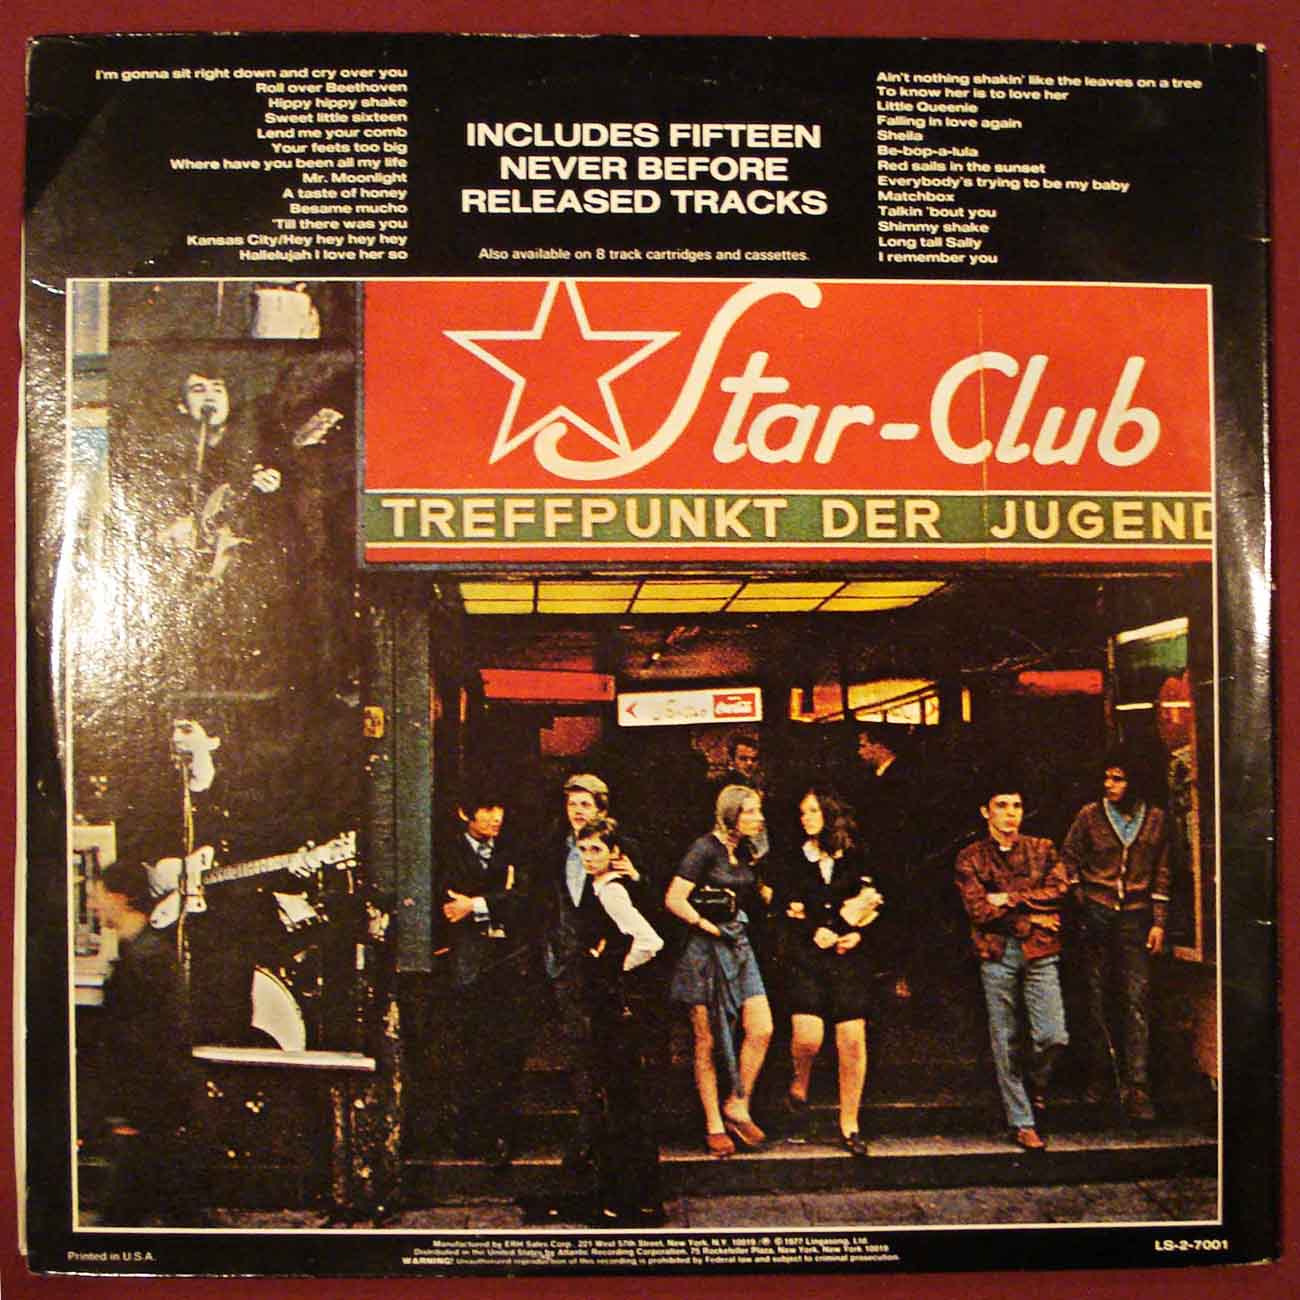 The Beatles - Live At The Star-Club Hamburg Germany 1962 (1977) Vinyl LP 33rpm LS-2-7001